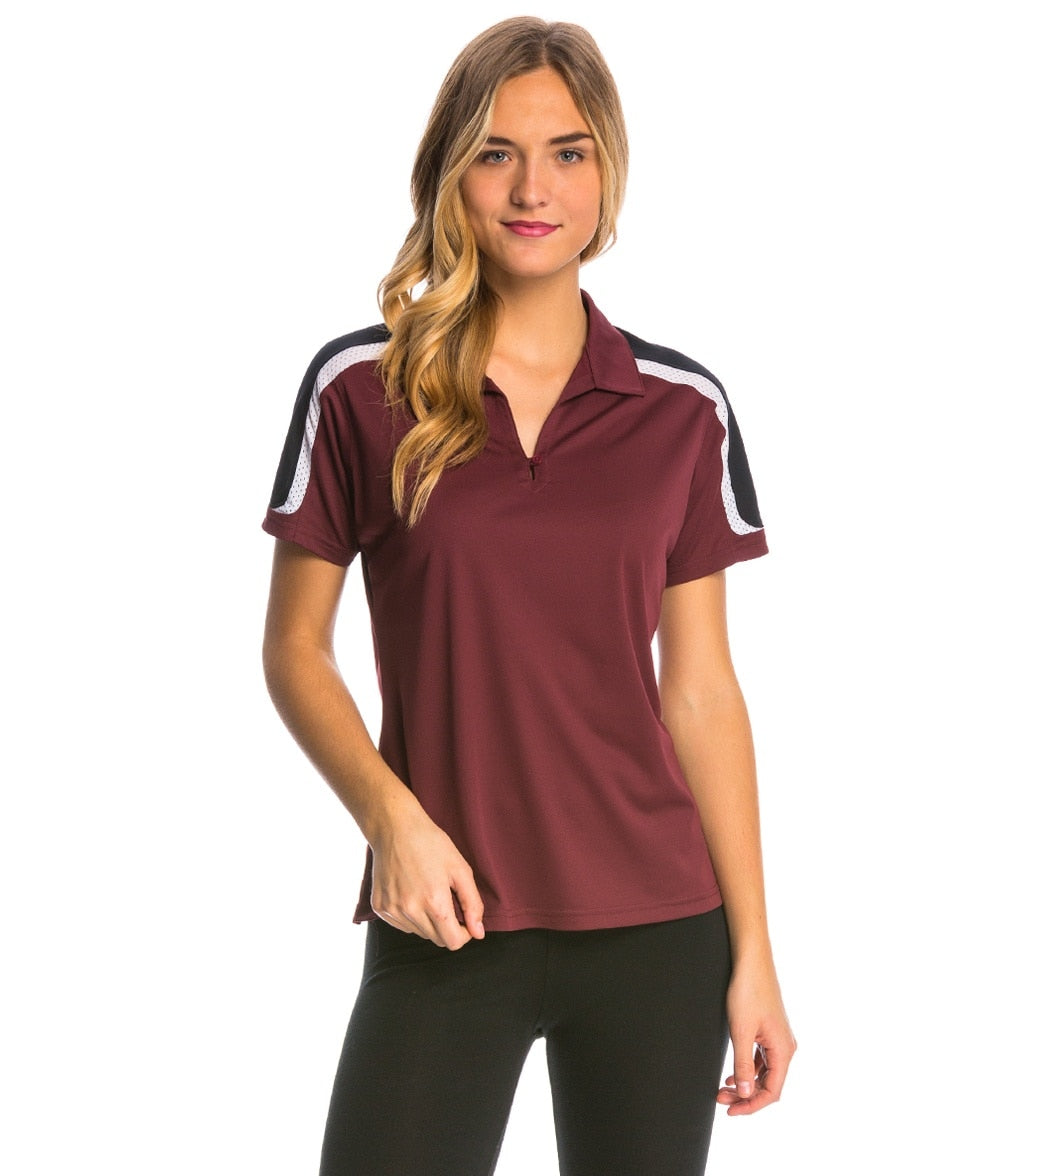 Women's Tech Polo Shirt - Maroon/Black/White 3Xl Polyester - Swimoutlet.com